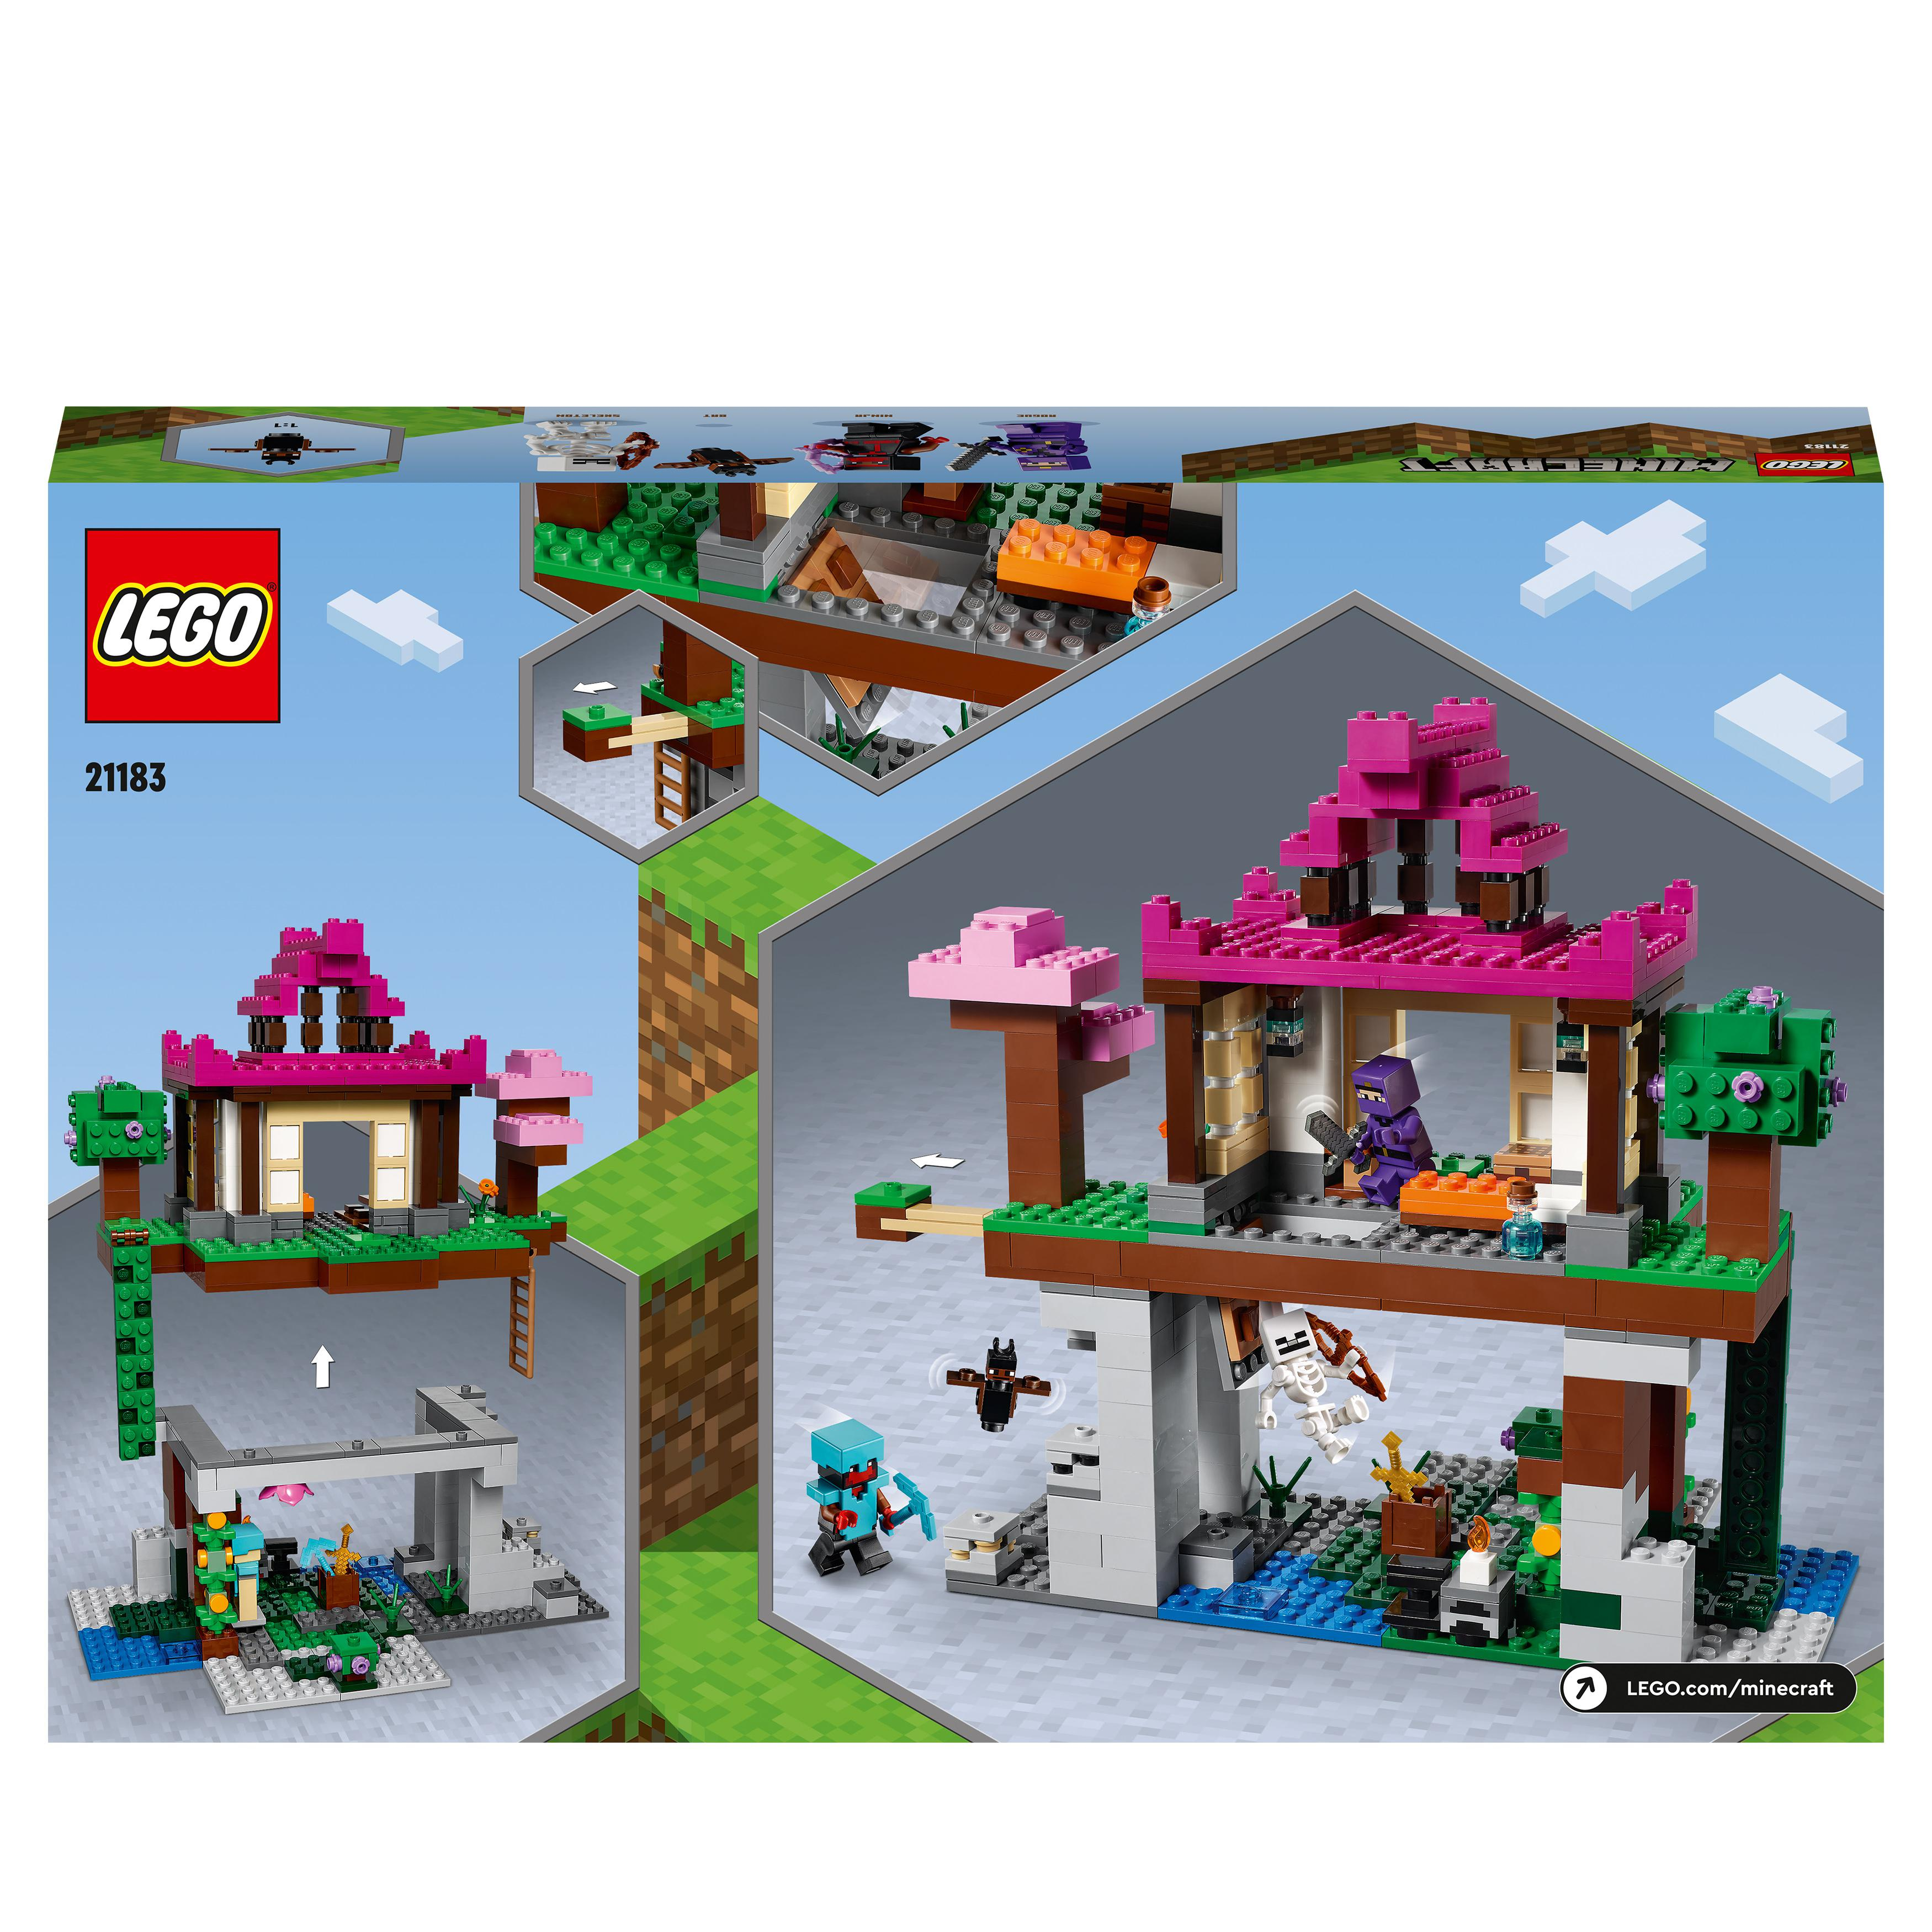 LEGO Minecraft I Campi d’Allenamento [21183]